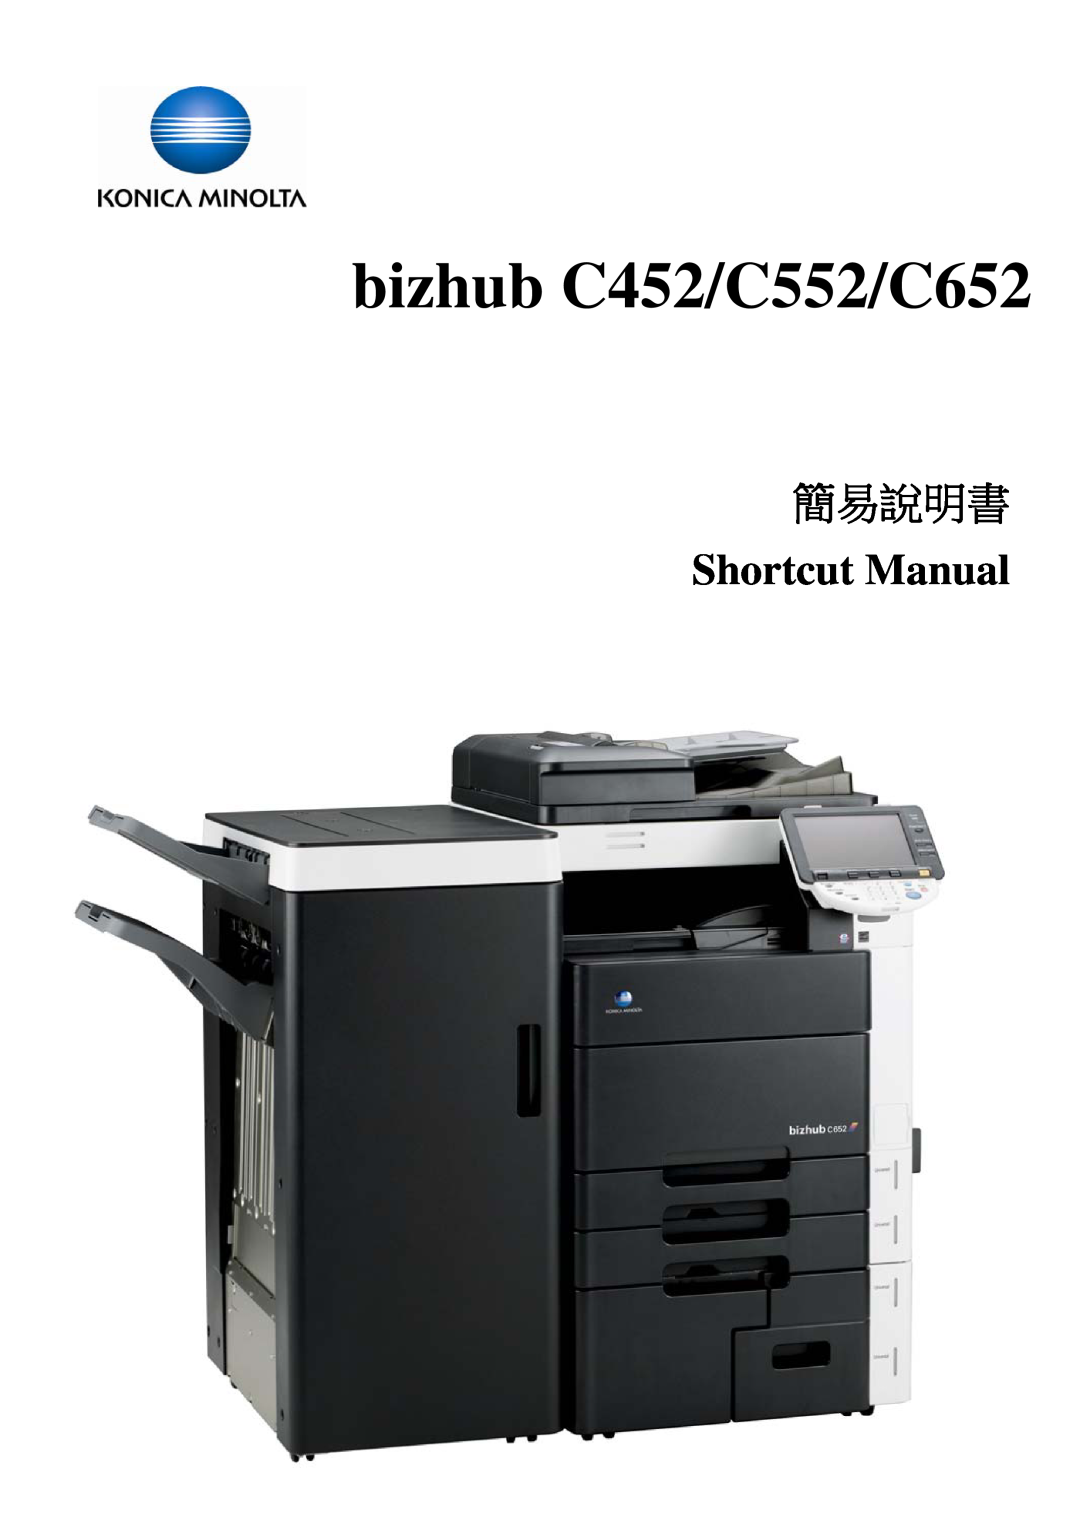 Konica Minolta manual bizhub C452/C552/C652, 簡易說明書, Shortcut Manual 